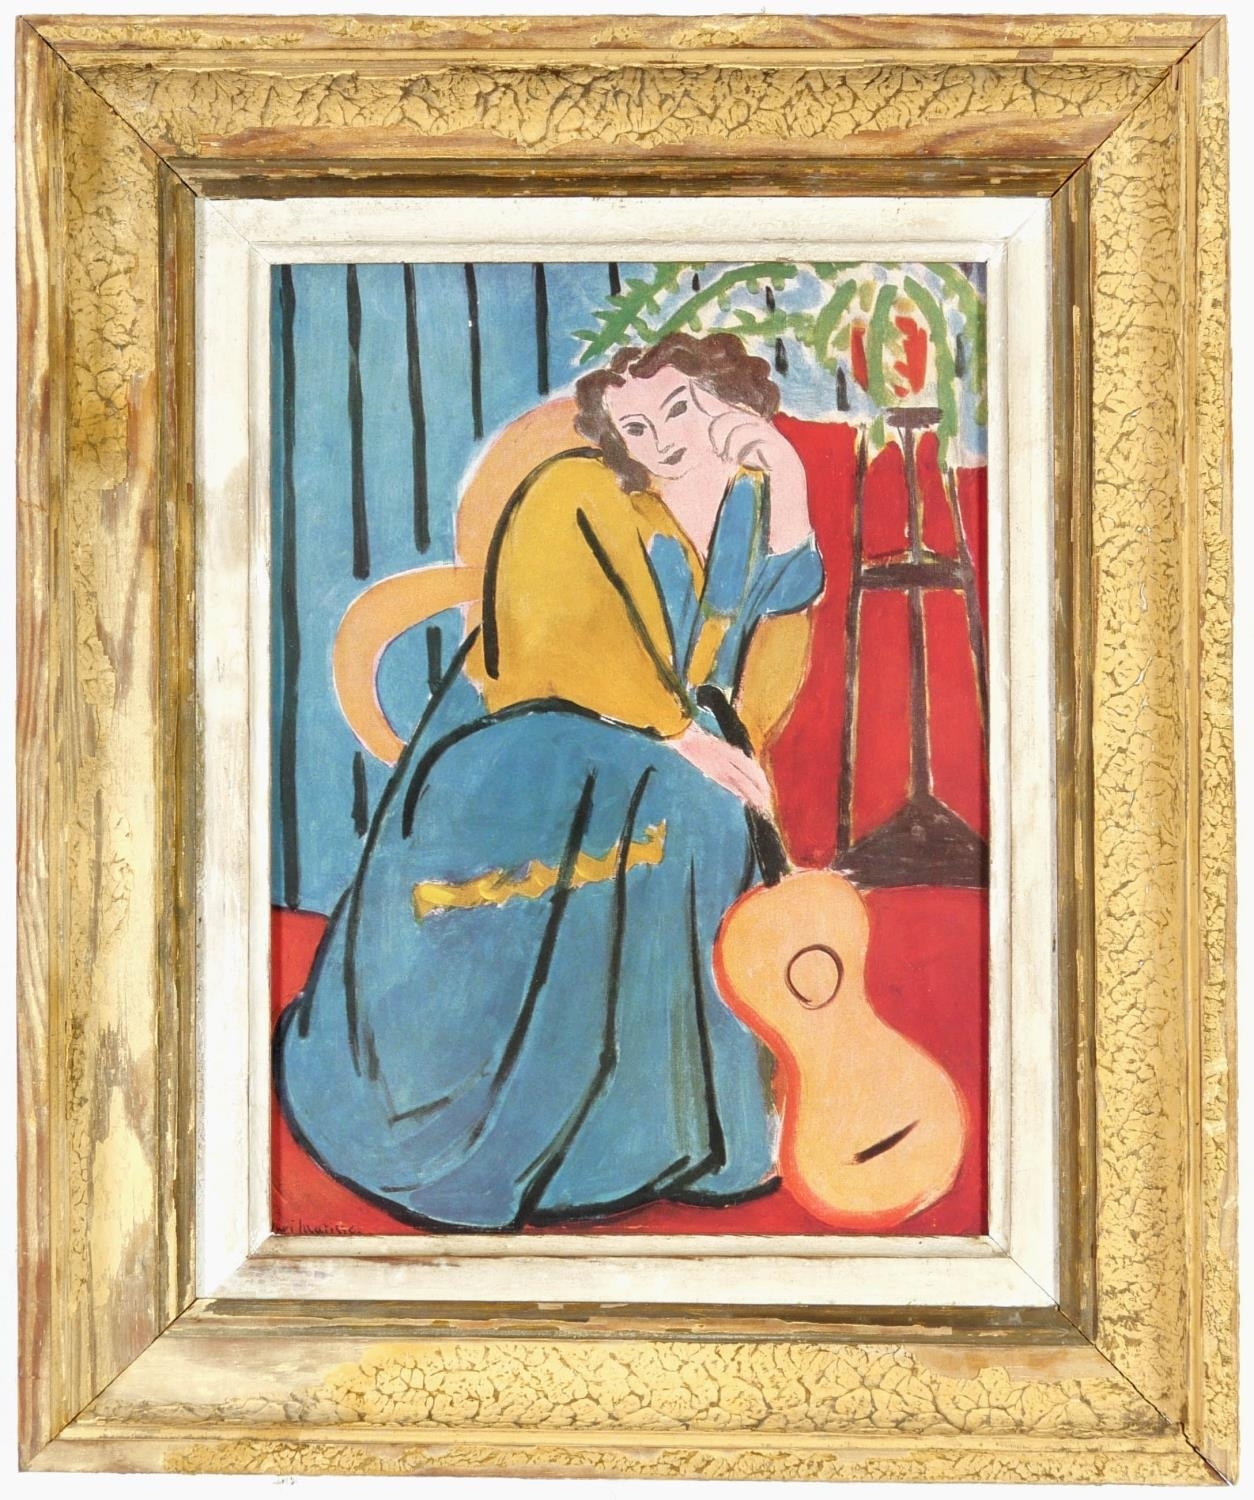 Femme avec guitare by Henri Matisse